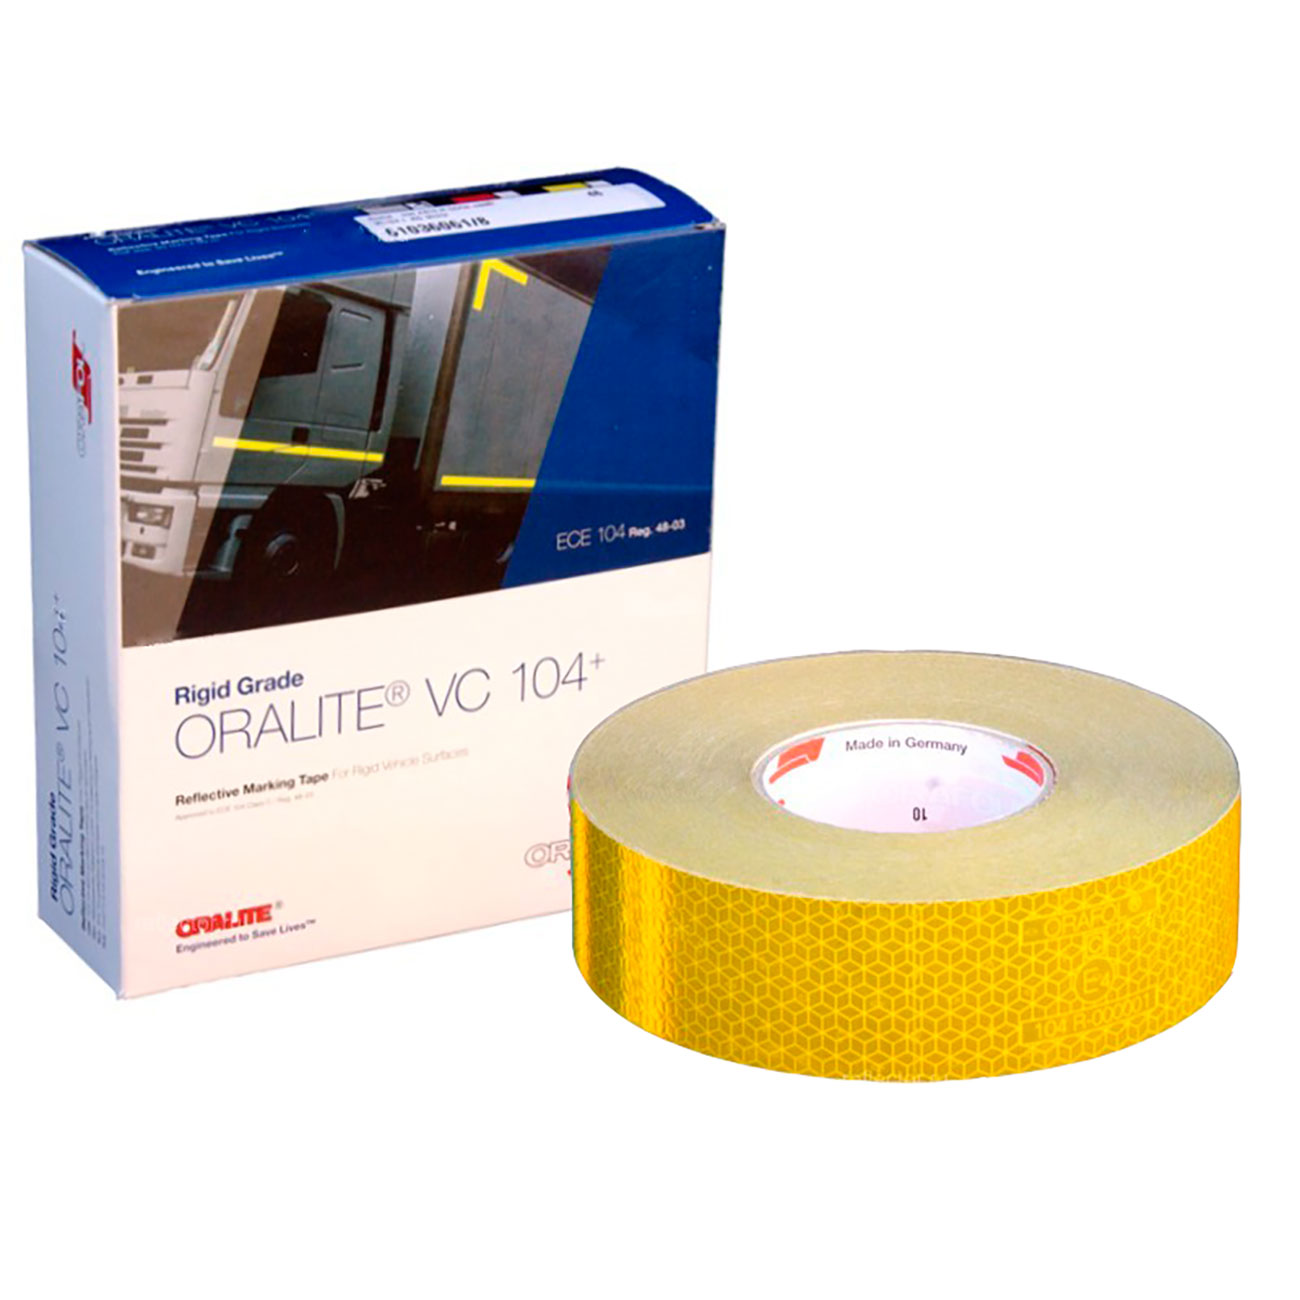 Фото Светоотражающая лента ORALITE VC104+ (REFLEXITE) RIGID GRADE, желтая, для жесткой поверхности, 50 мм х 50 м {or.vc104.rg.y.50}